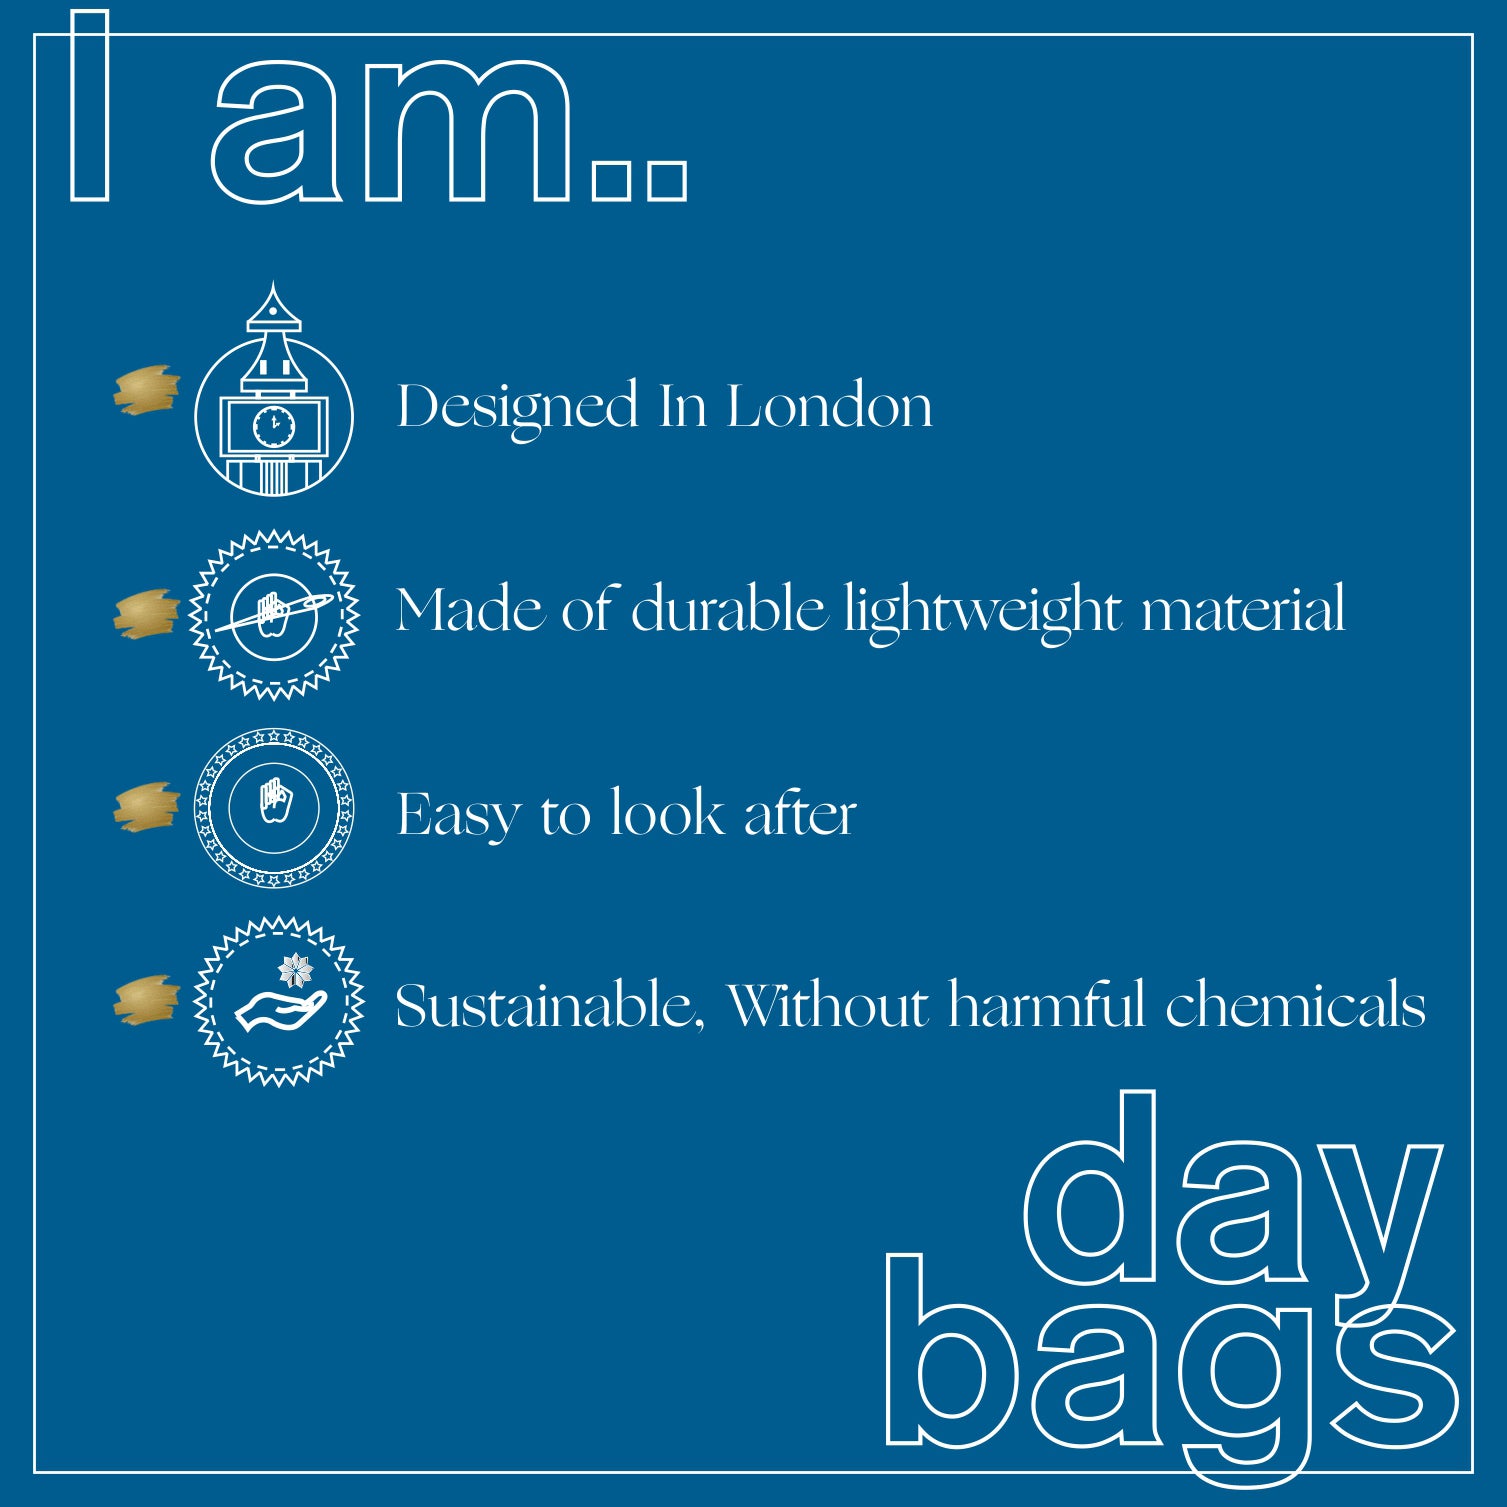 Accessorize London women's tan Talia Small Twistlock bag